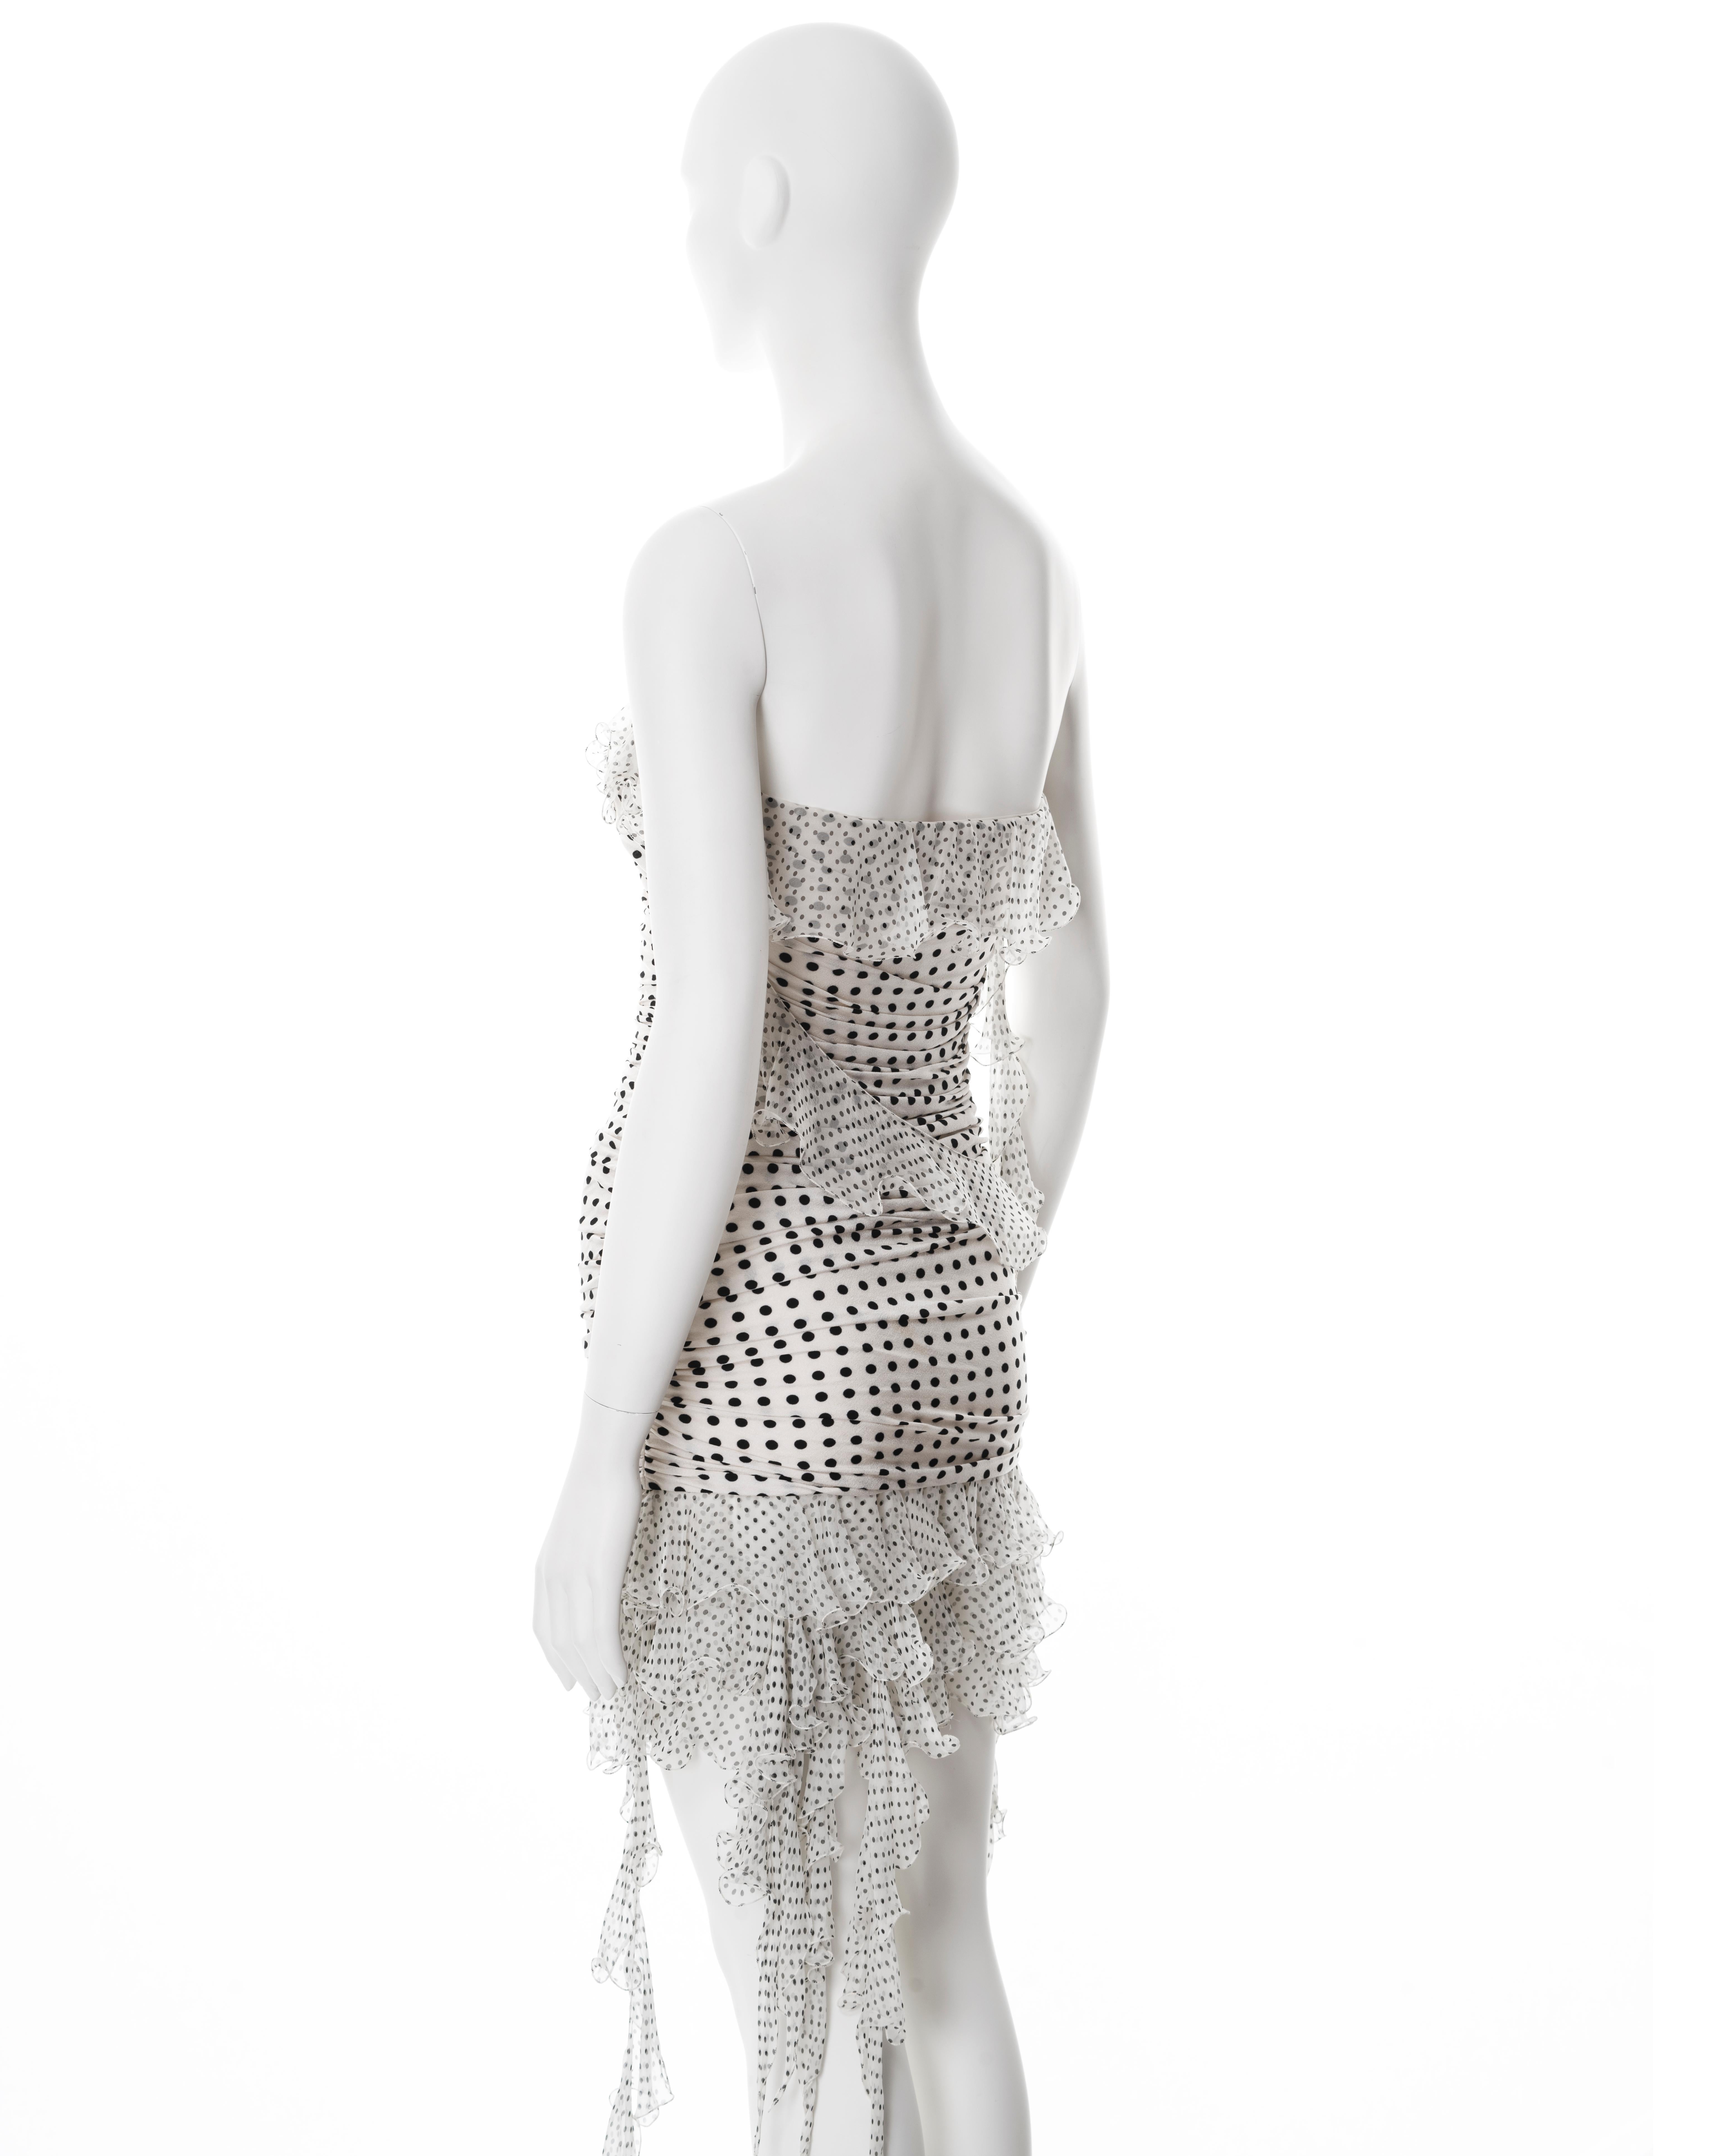 Emanuel Ungaro black and white polkadot ruched mini dress, ss 2003 6